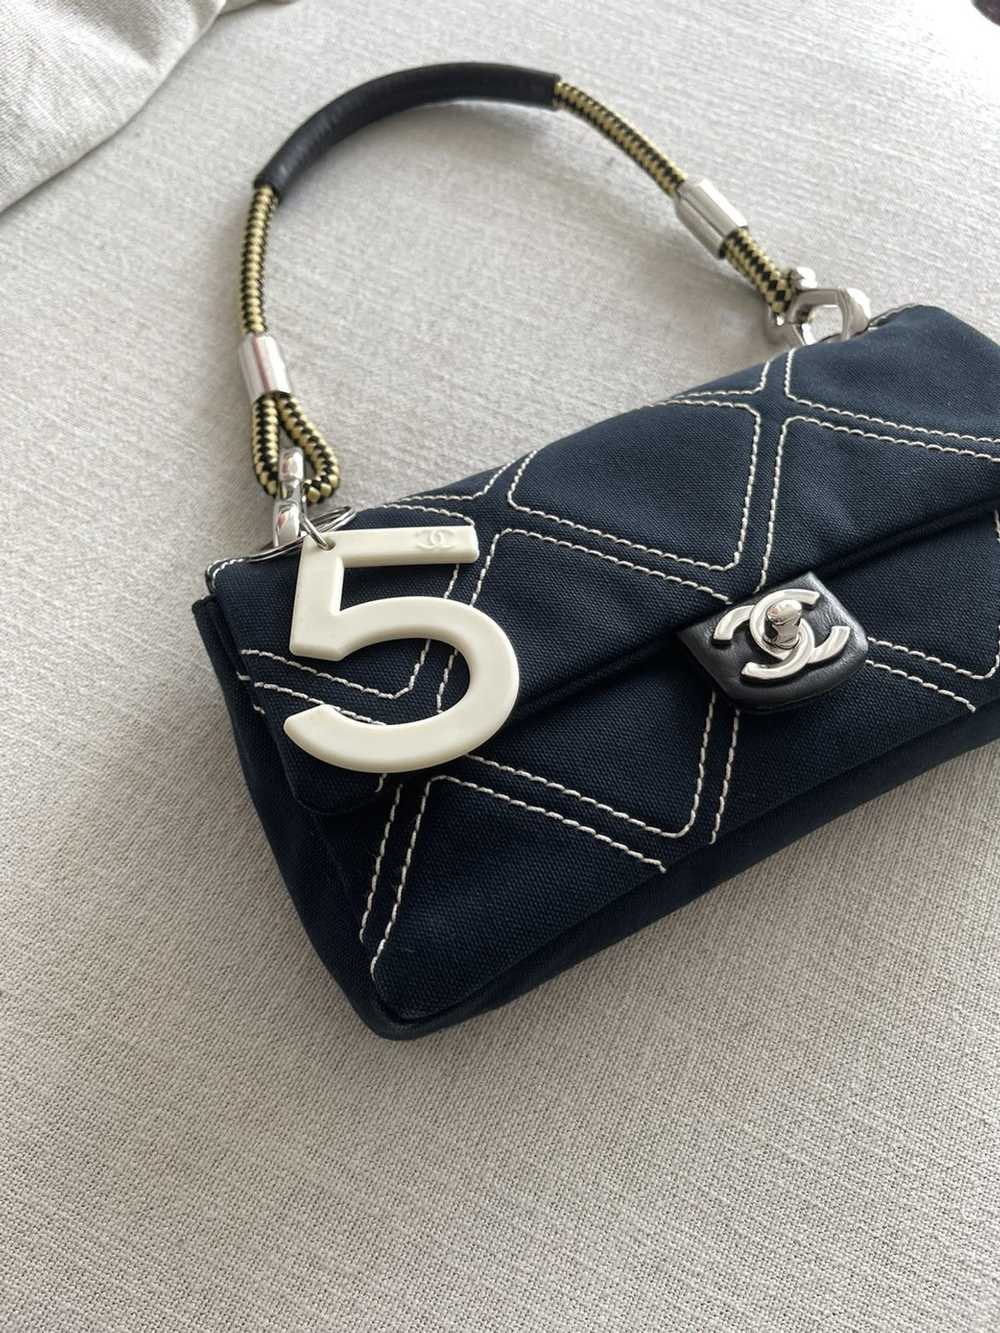 Chanel Rare Denim Chanel Bag + 5 Charm - image 2